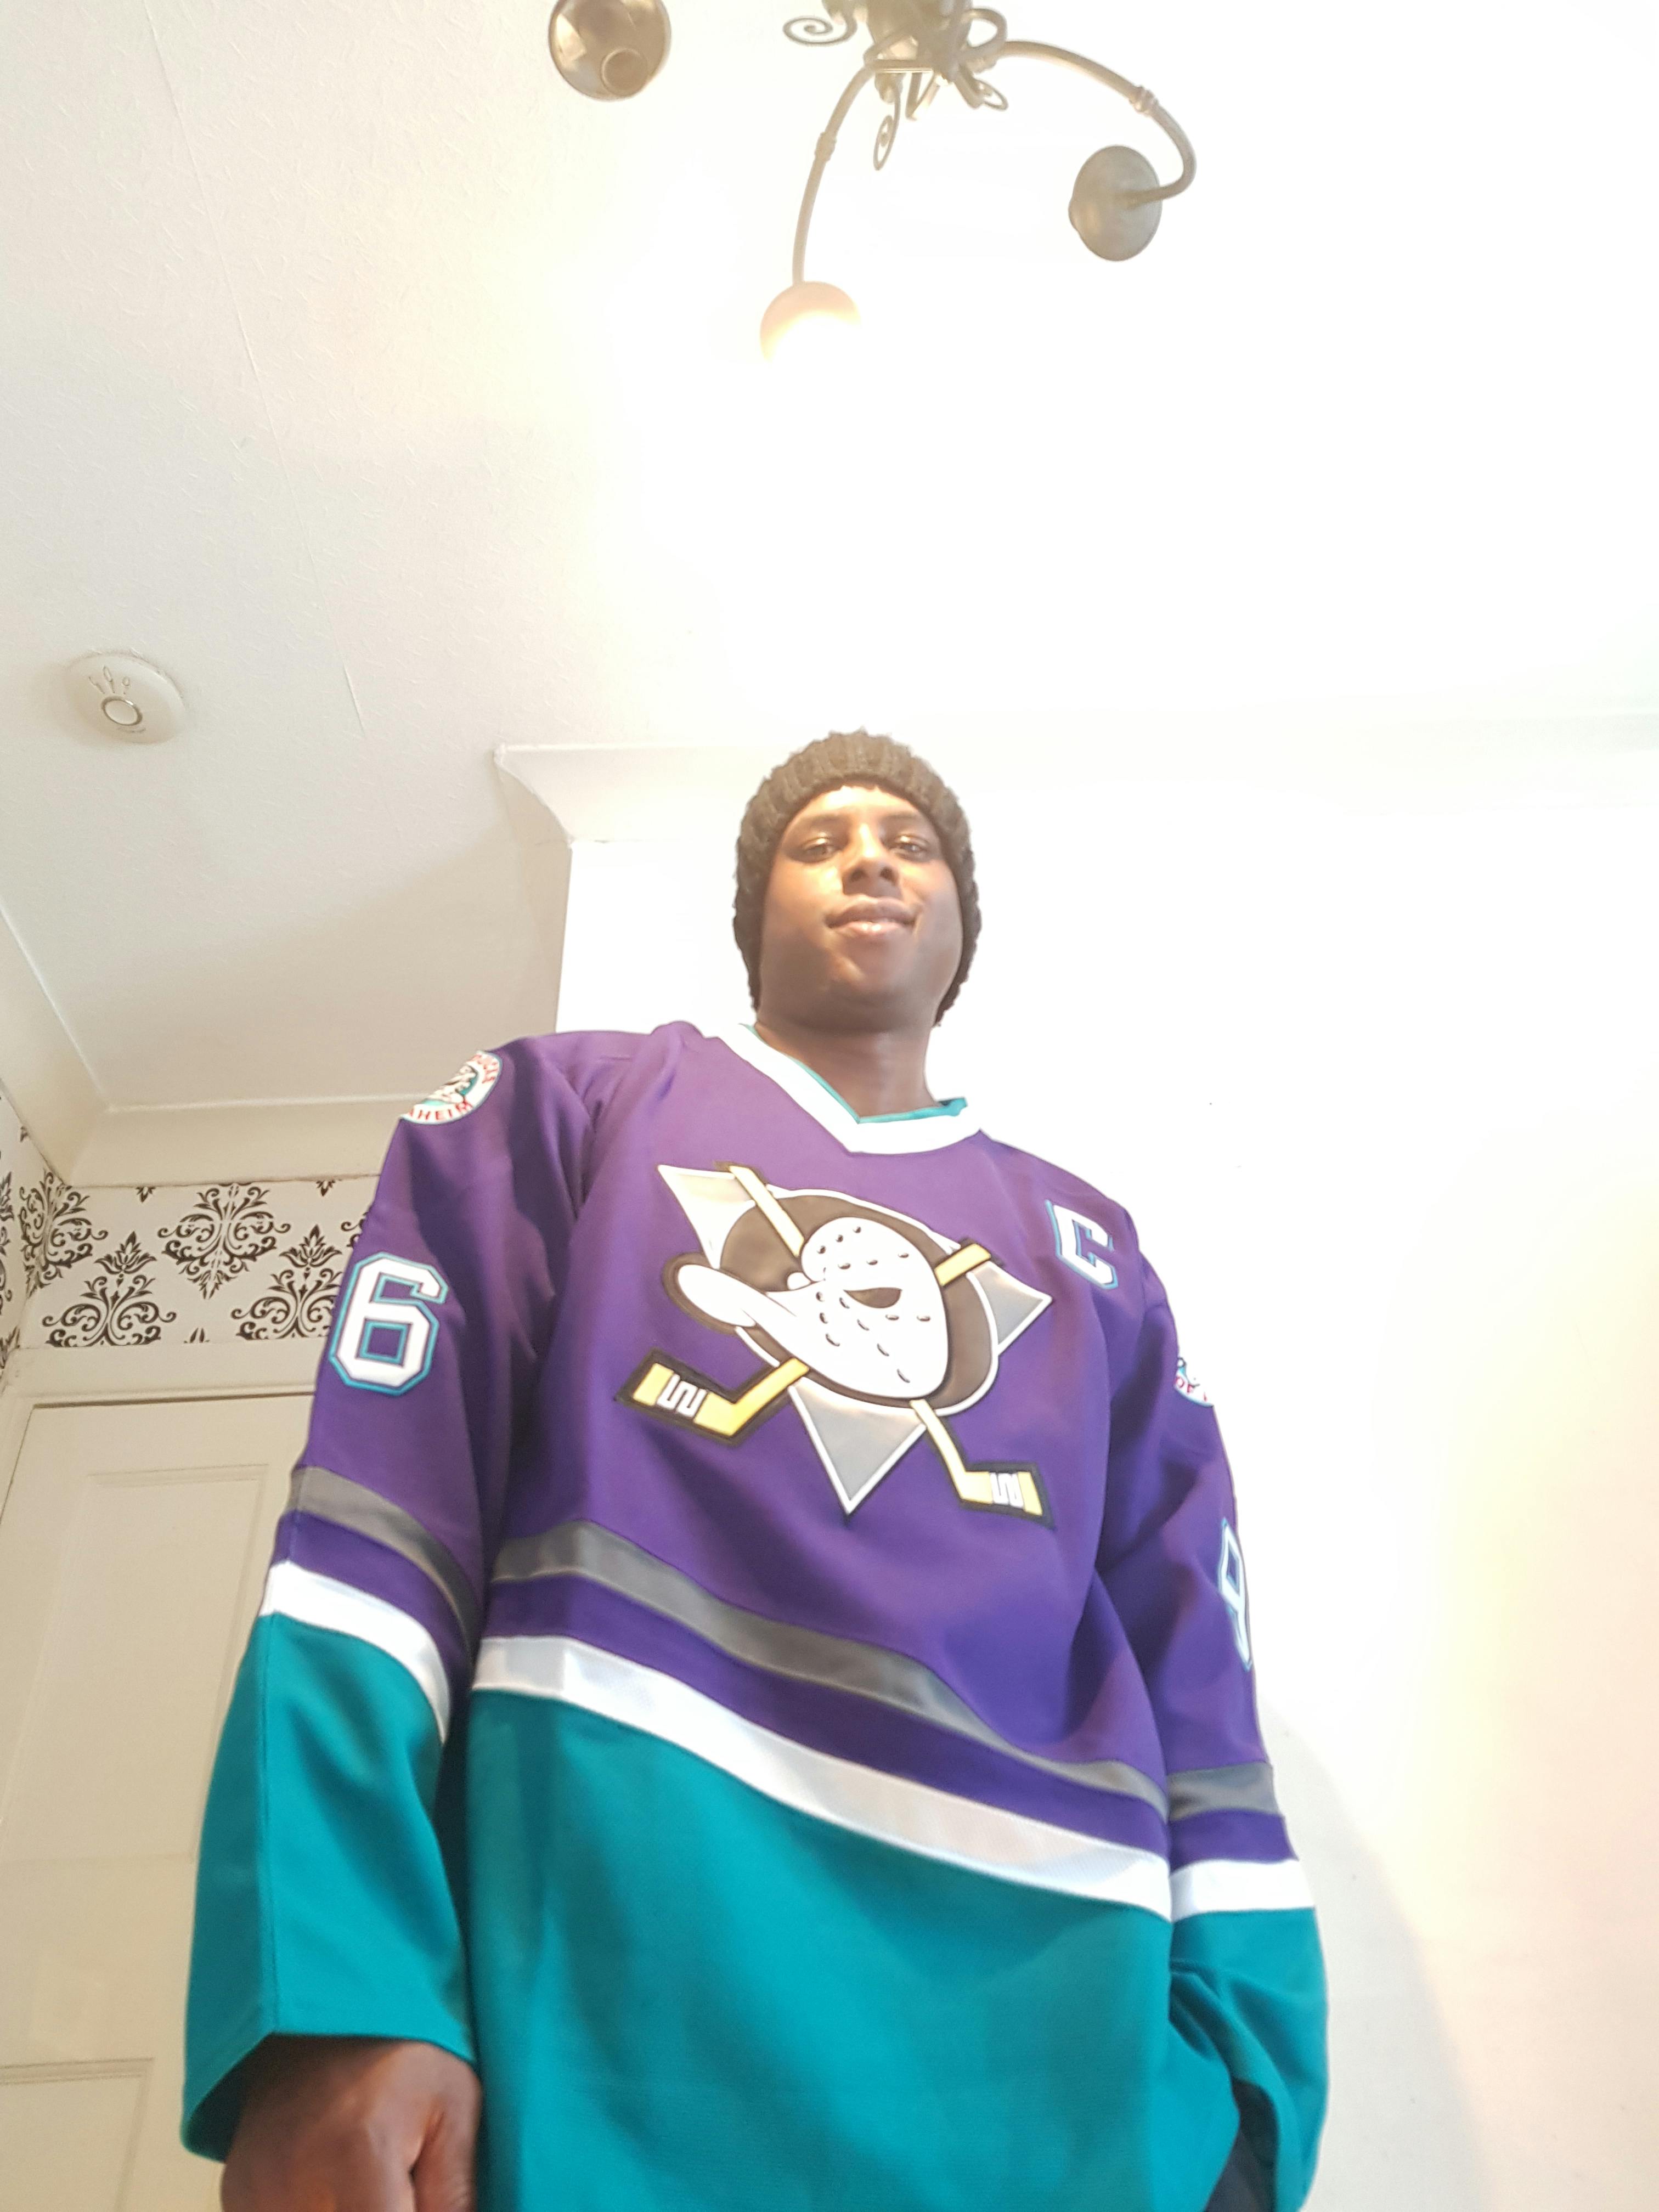 Mighty Ducks Movie Ice Hockey Jersey Purple – Jersey Junkiez